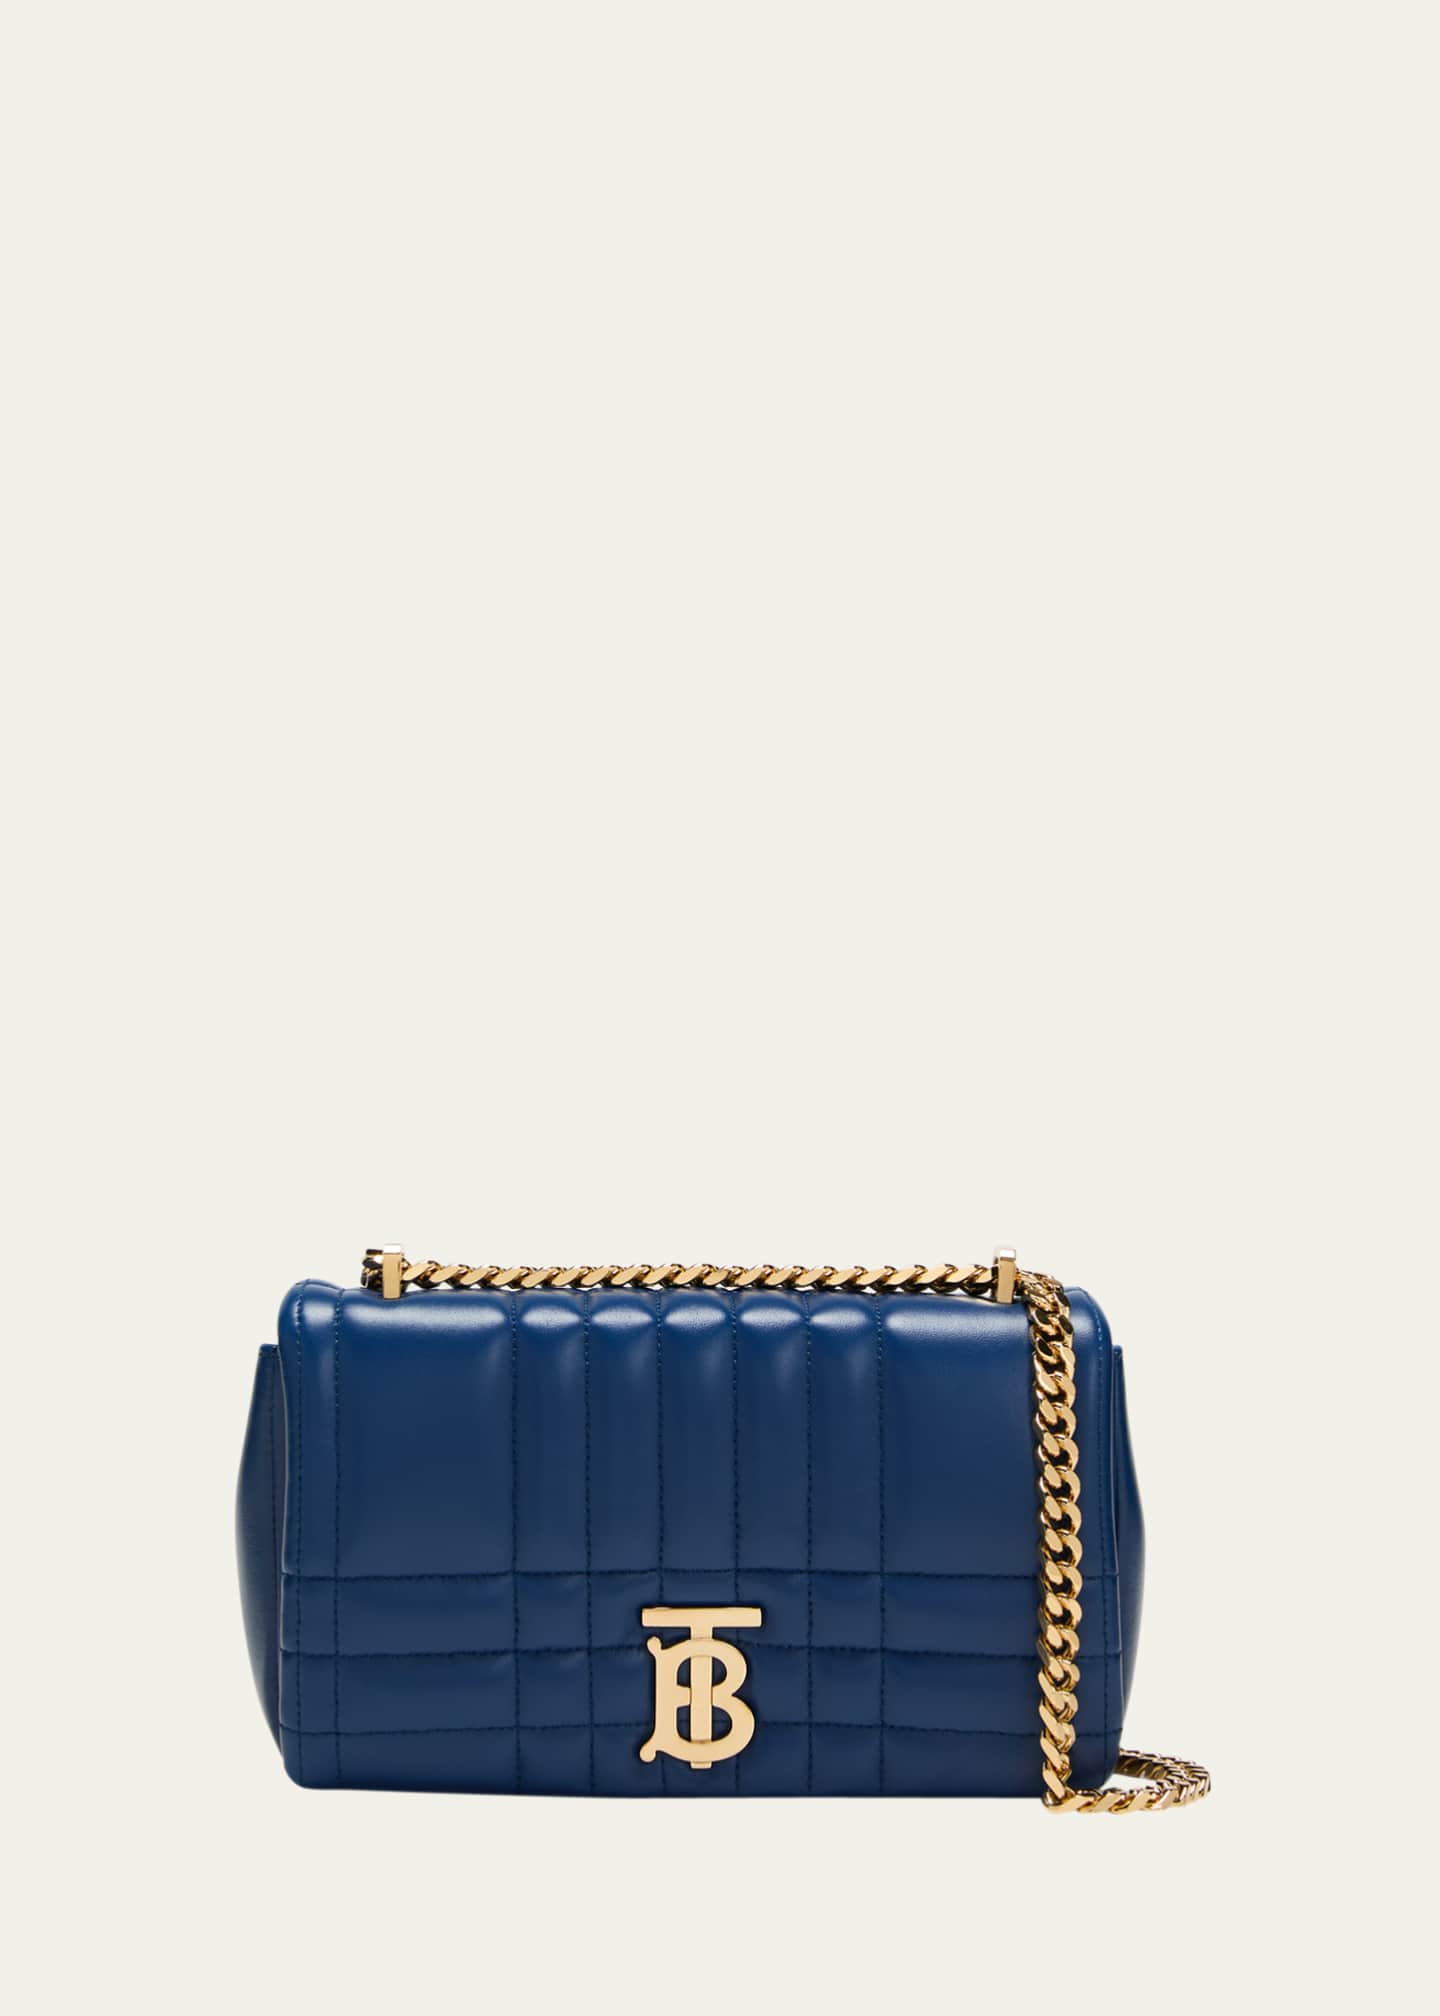 Burberry Handbags at Bergdorf Goodman